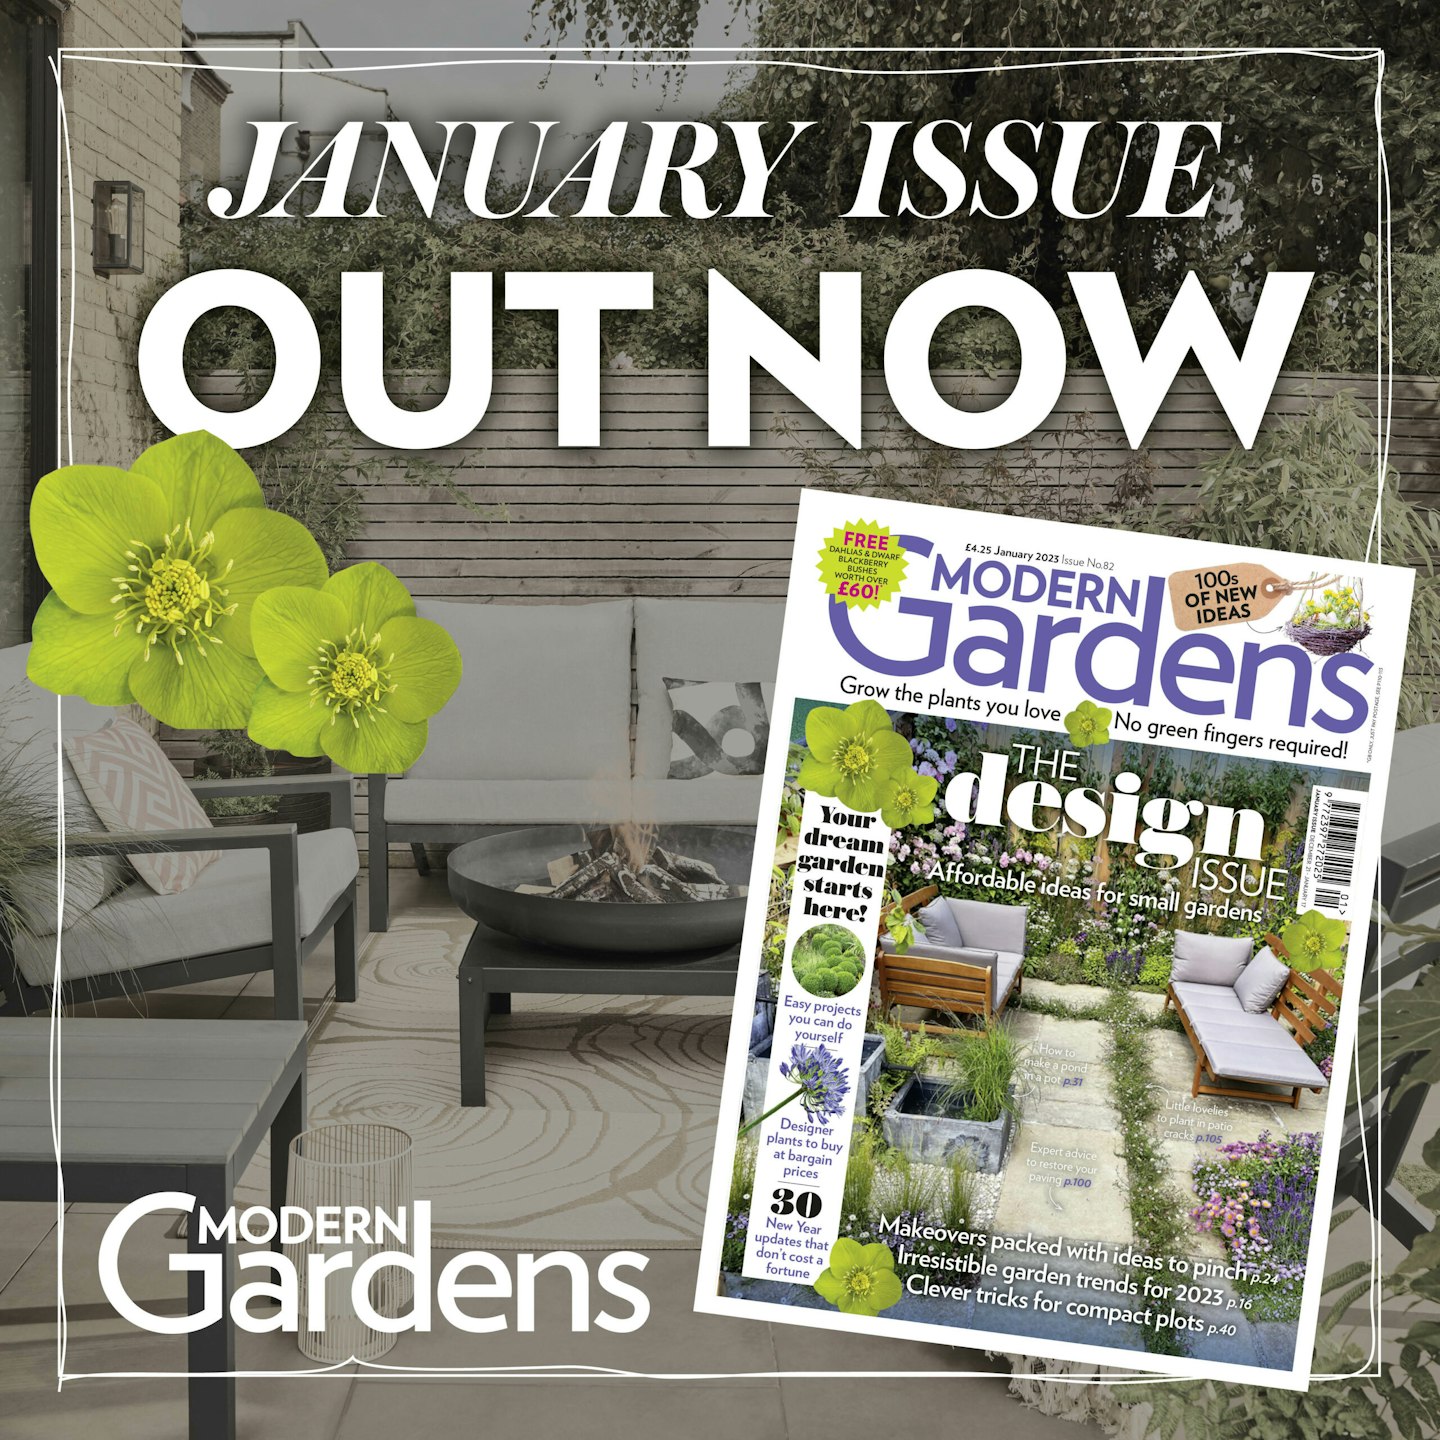 Modern Gardens - January issue